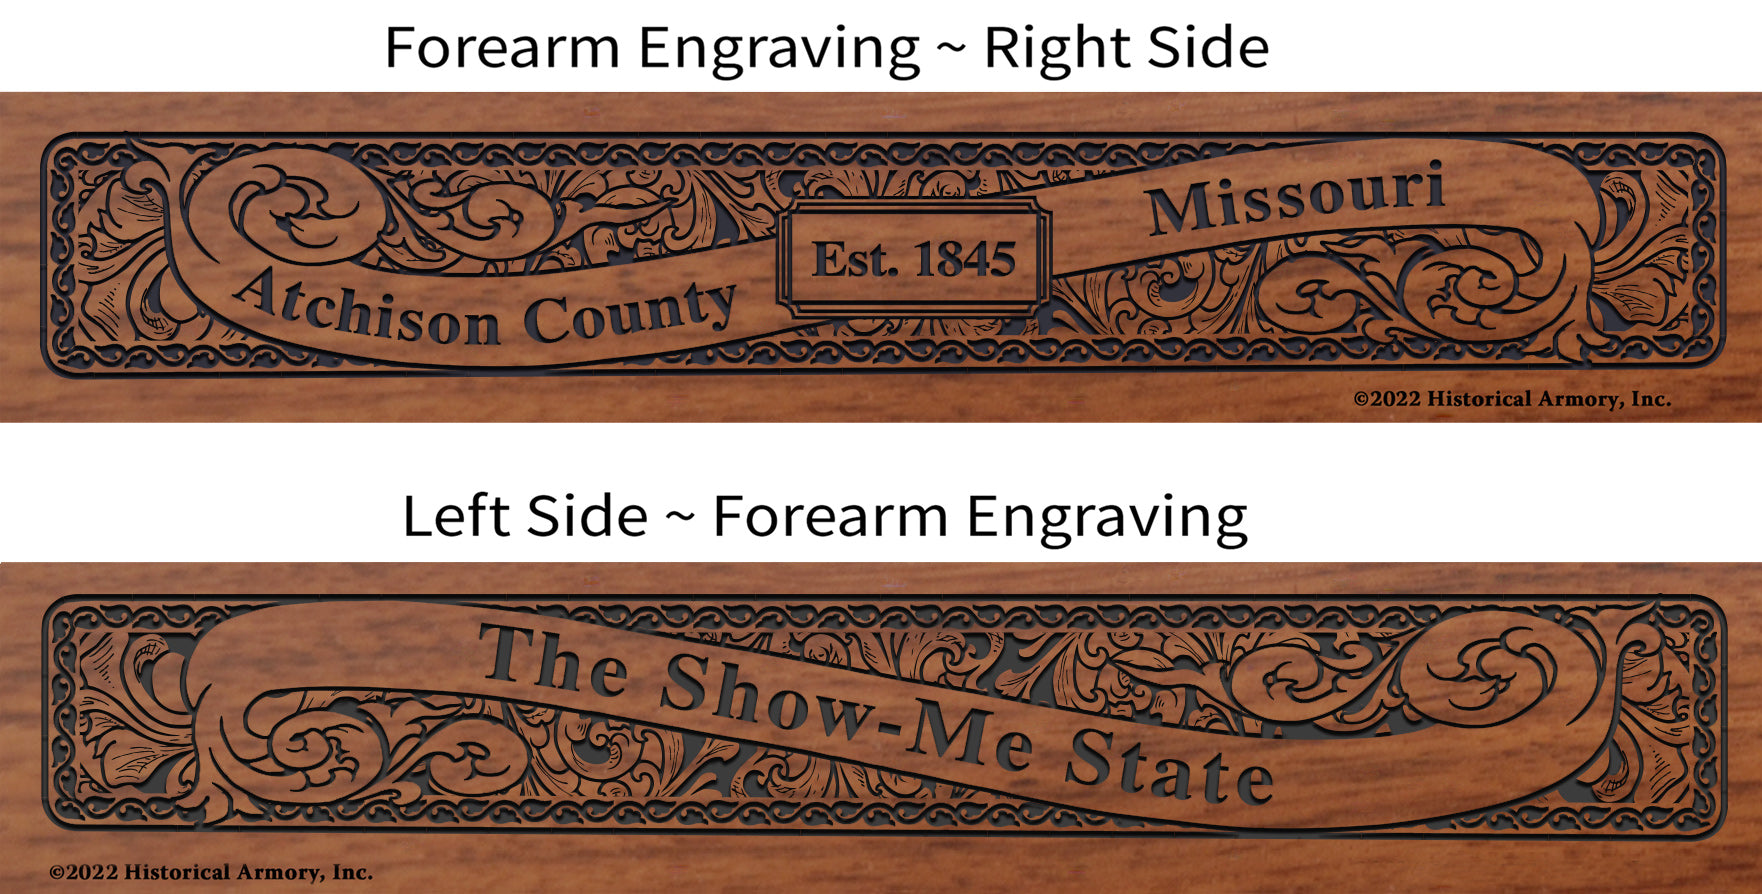 Atchison County Missouri Engraved Rifle Forearm